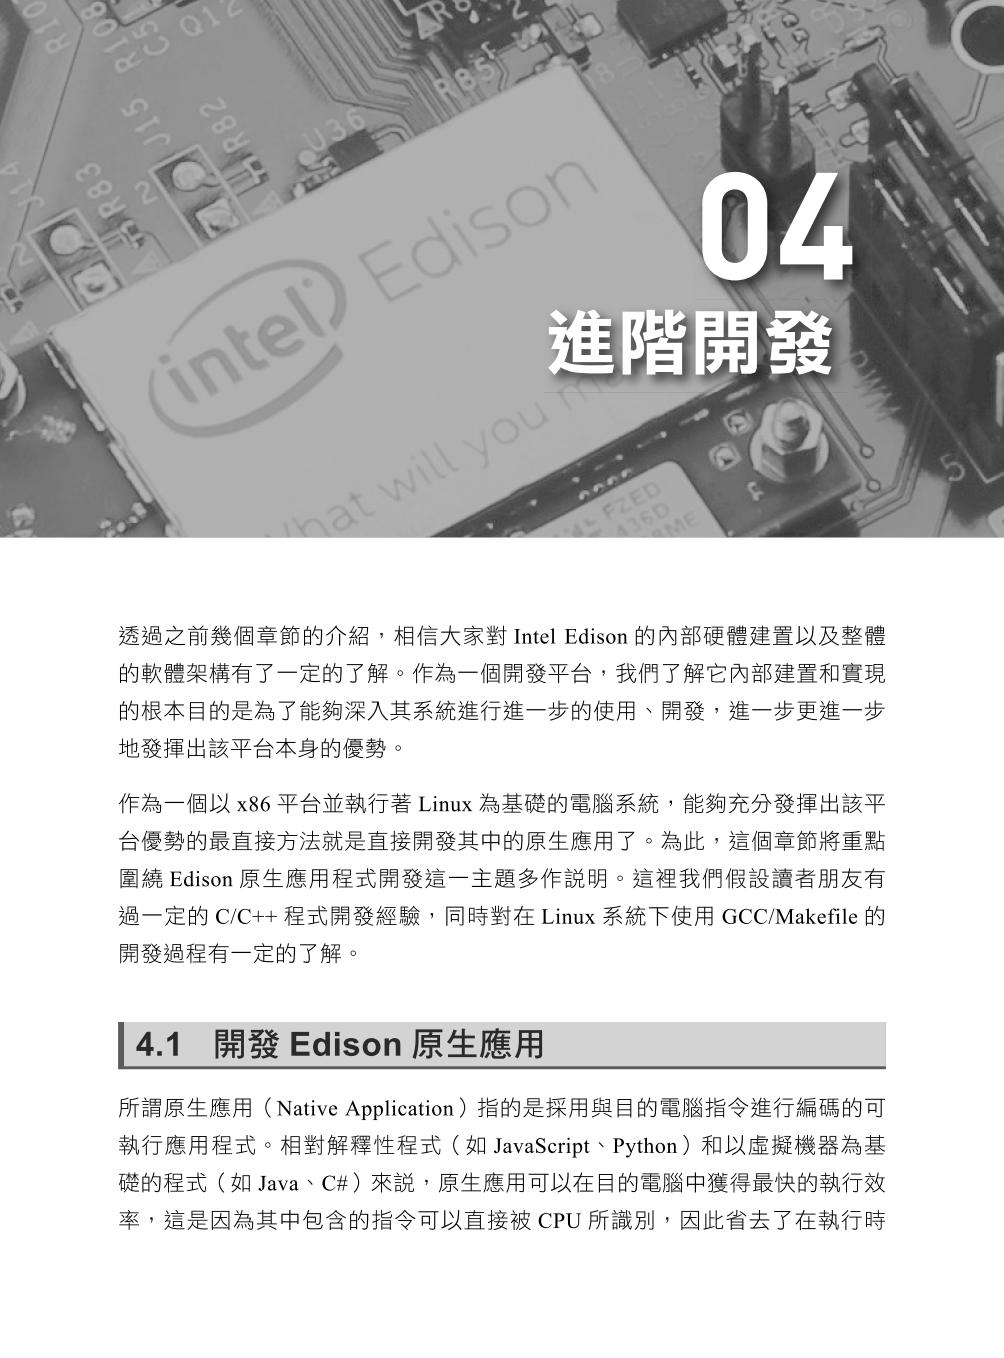 ►GO►最新優惠► 【書籍】x86平台的MAKER：使用Intel Edison及Yocto Project